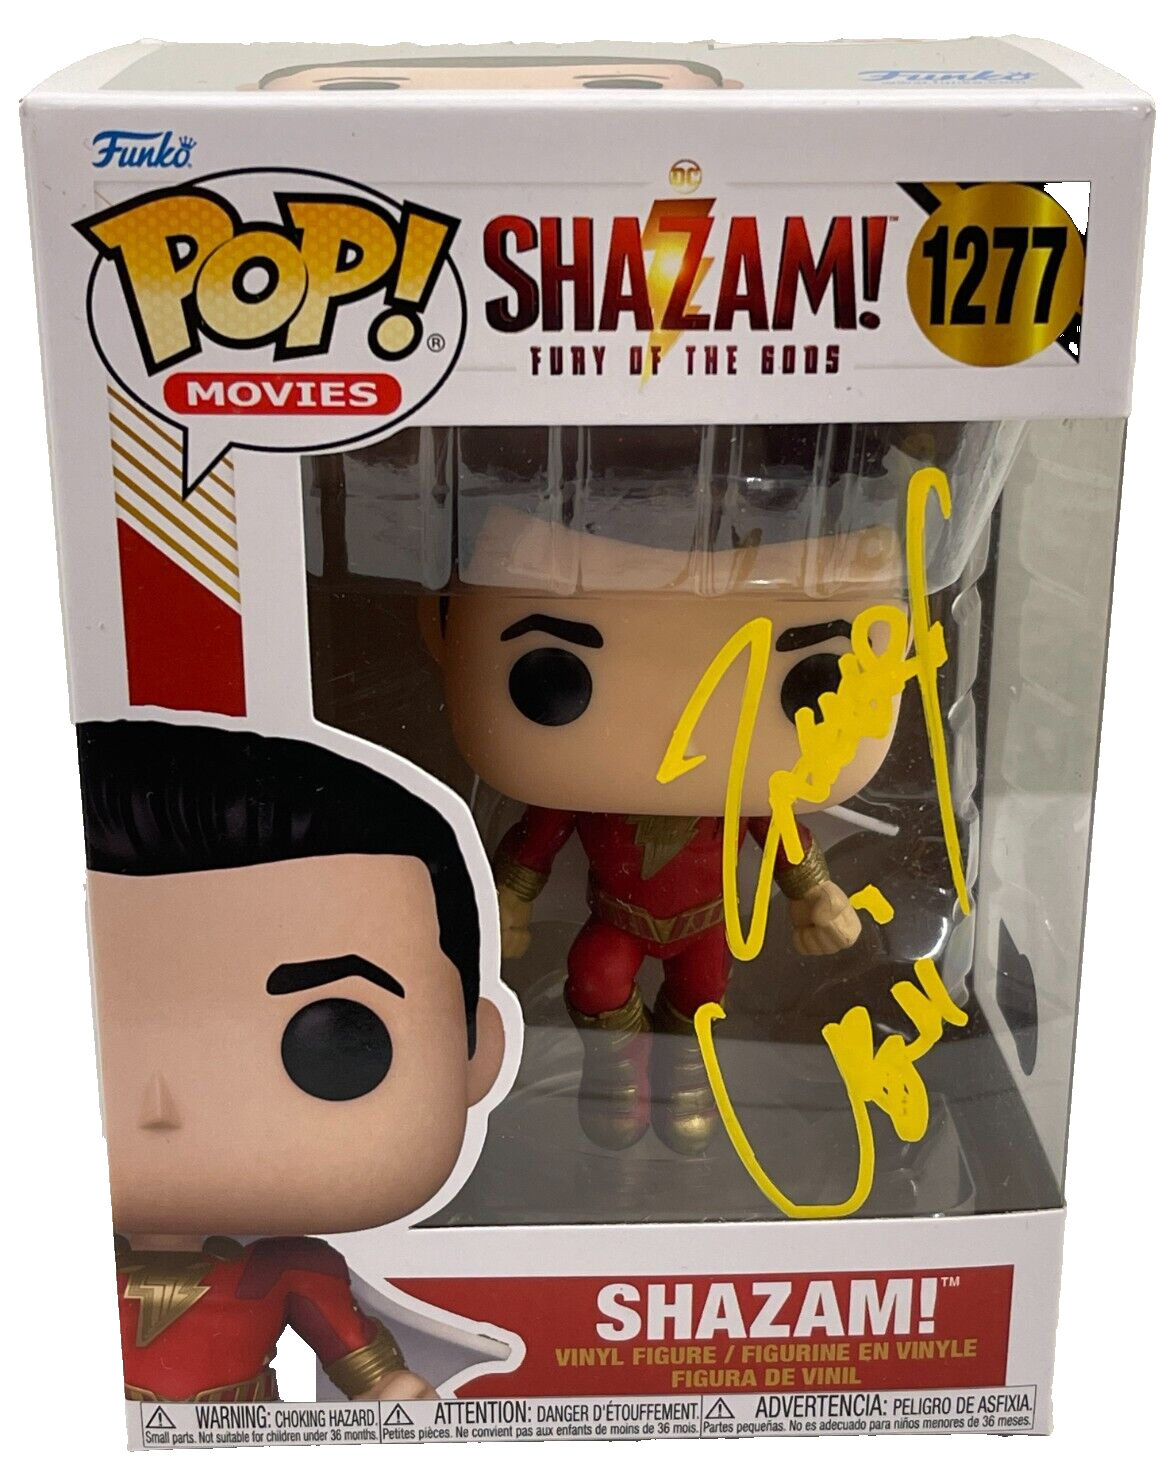 Zachary Levi Authentic Autographed Shazam! 1277 Funko Pop Figure